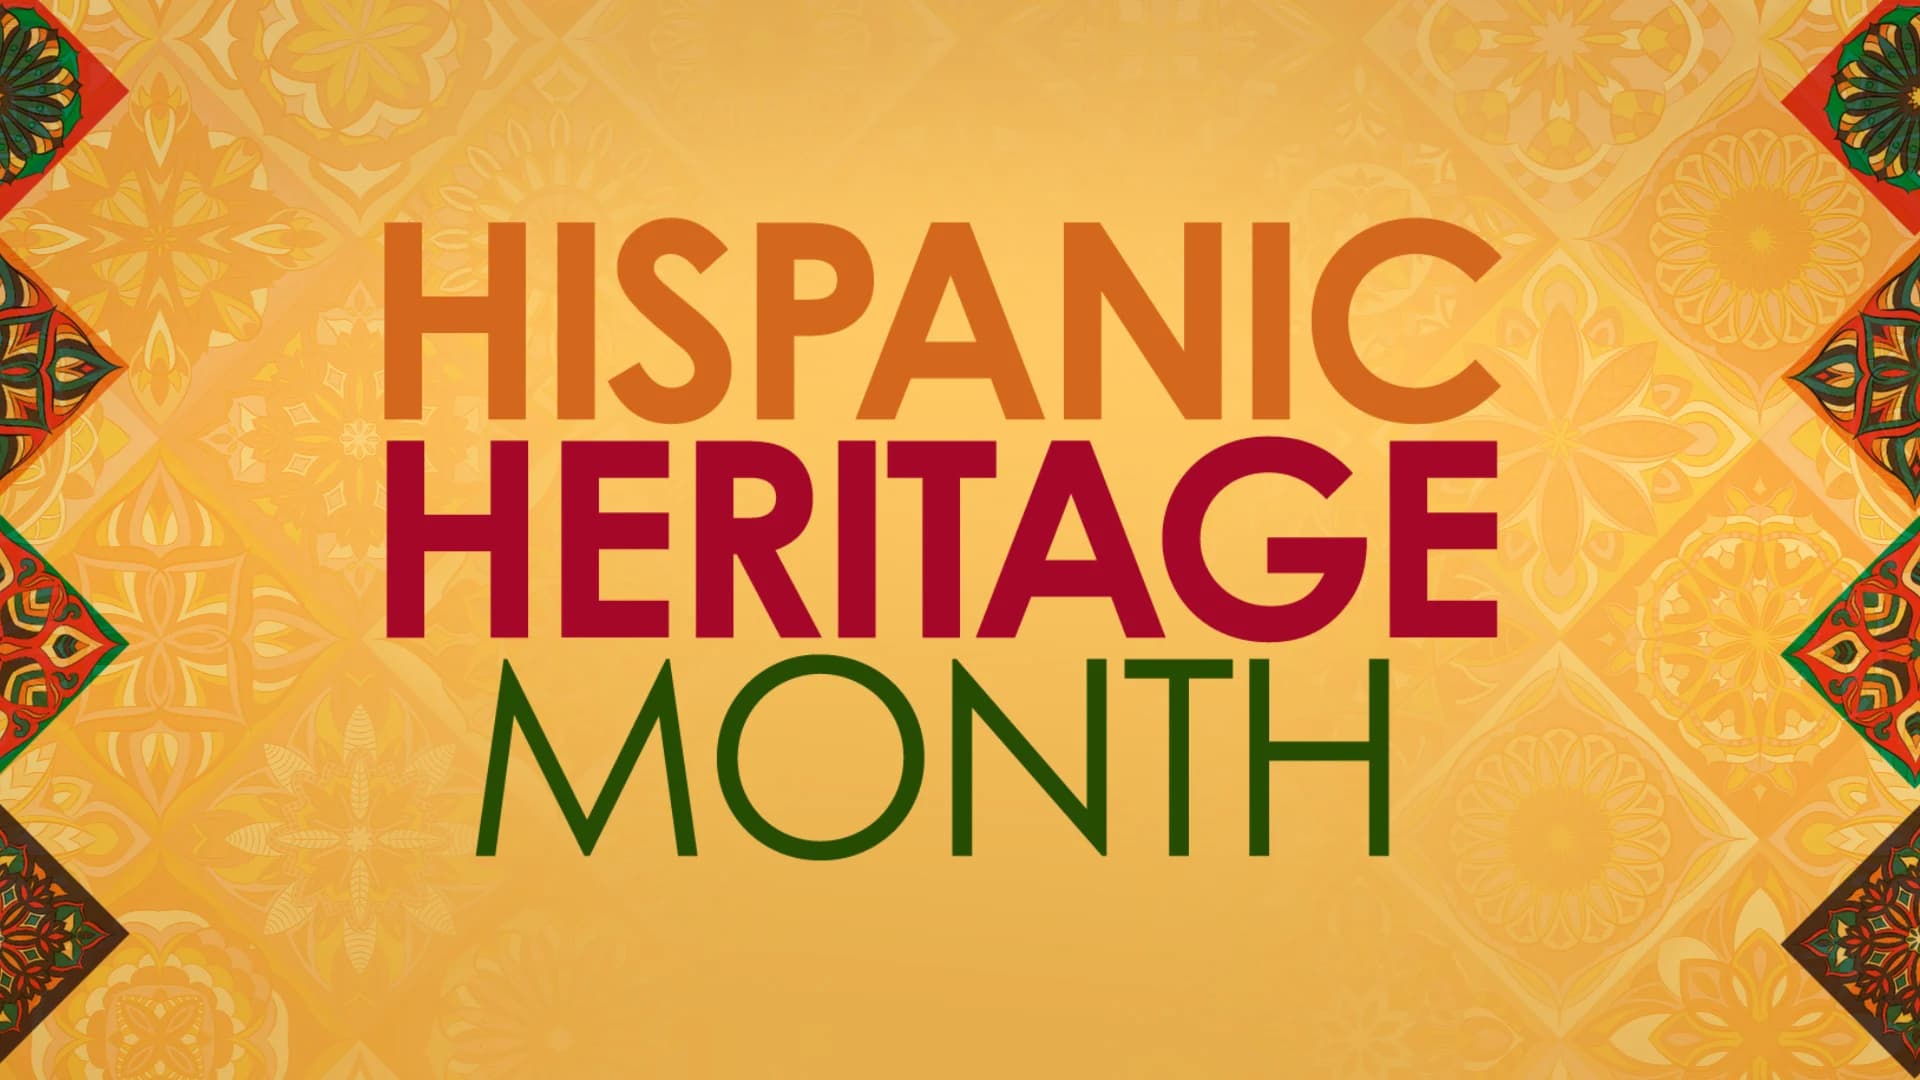 Hispanic Heritage Month at News 12